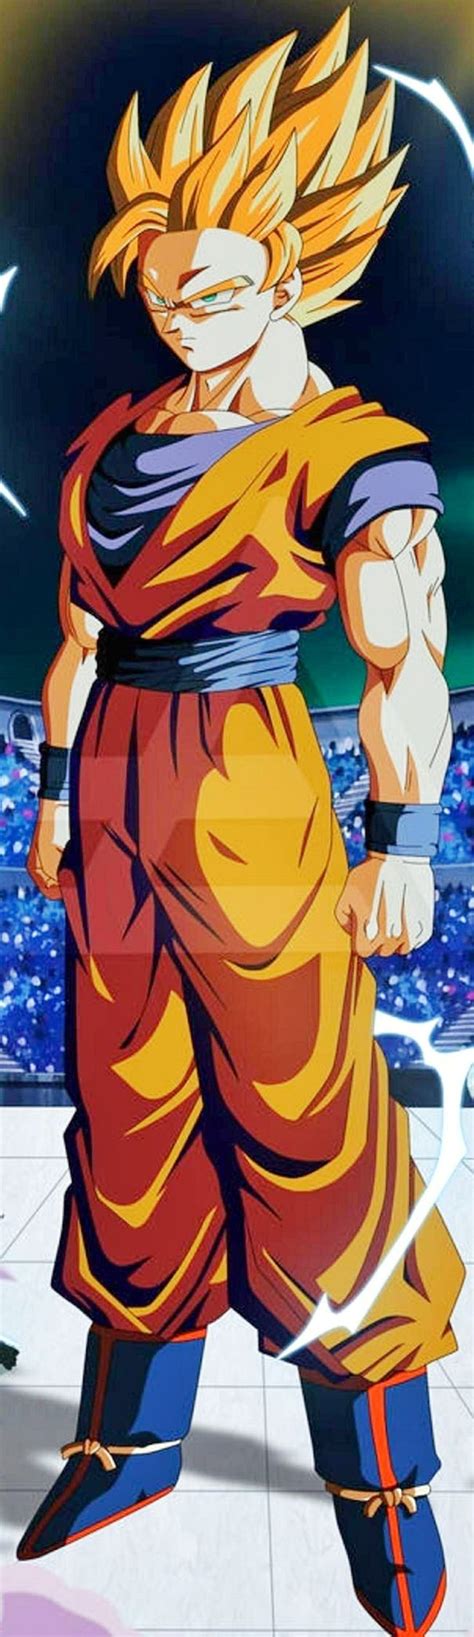 Goku Ssj2 Dragon Ball Wallpaper Iphone Dragon Ball Wallpapers Dragon